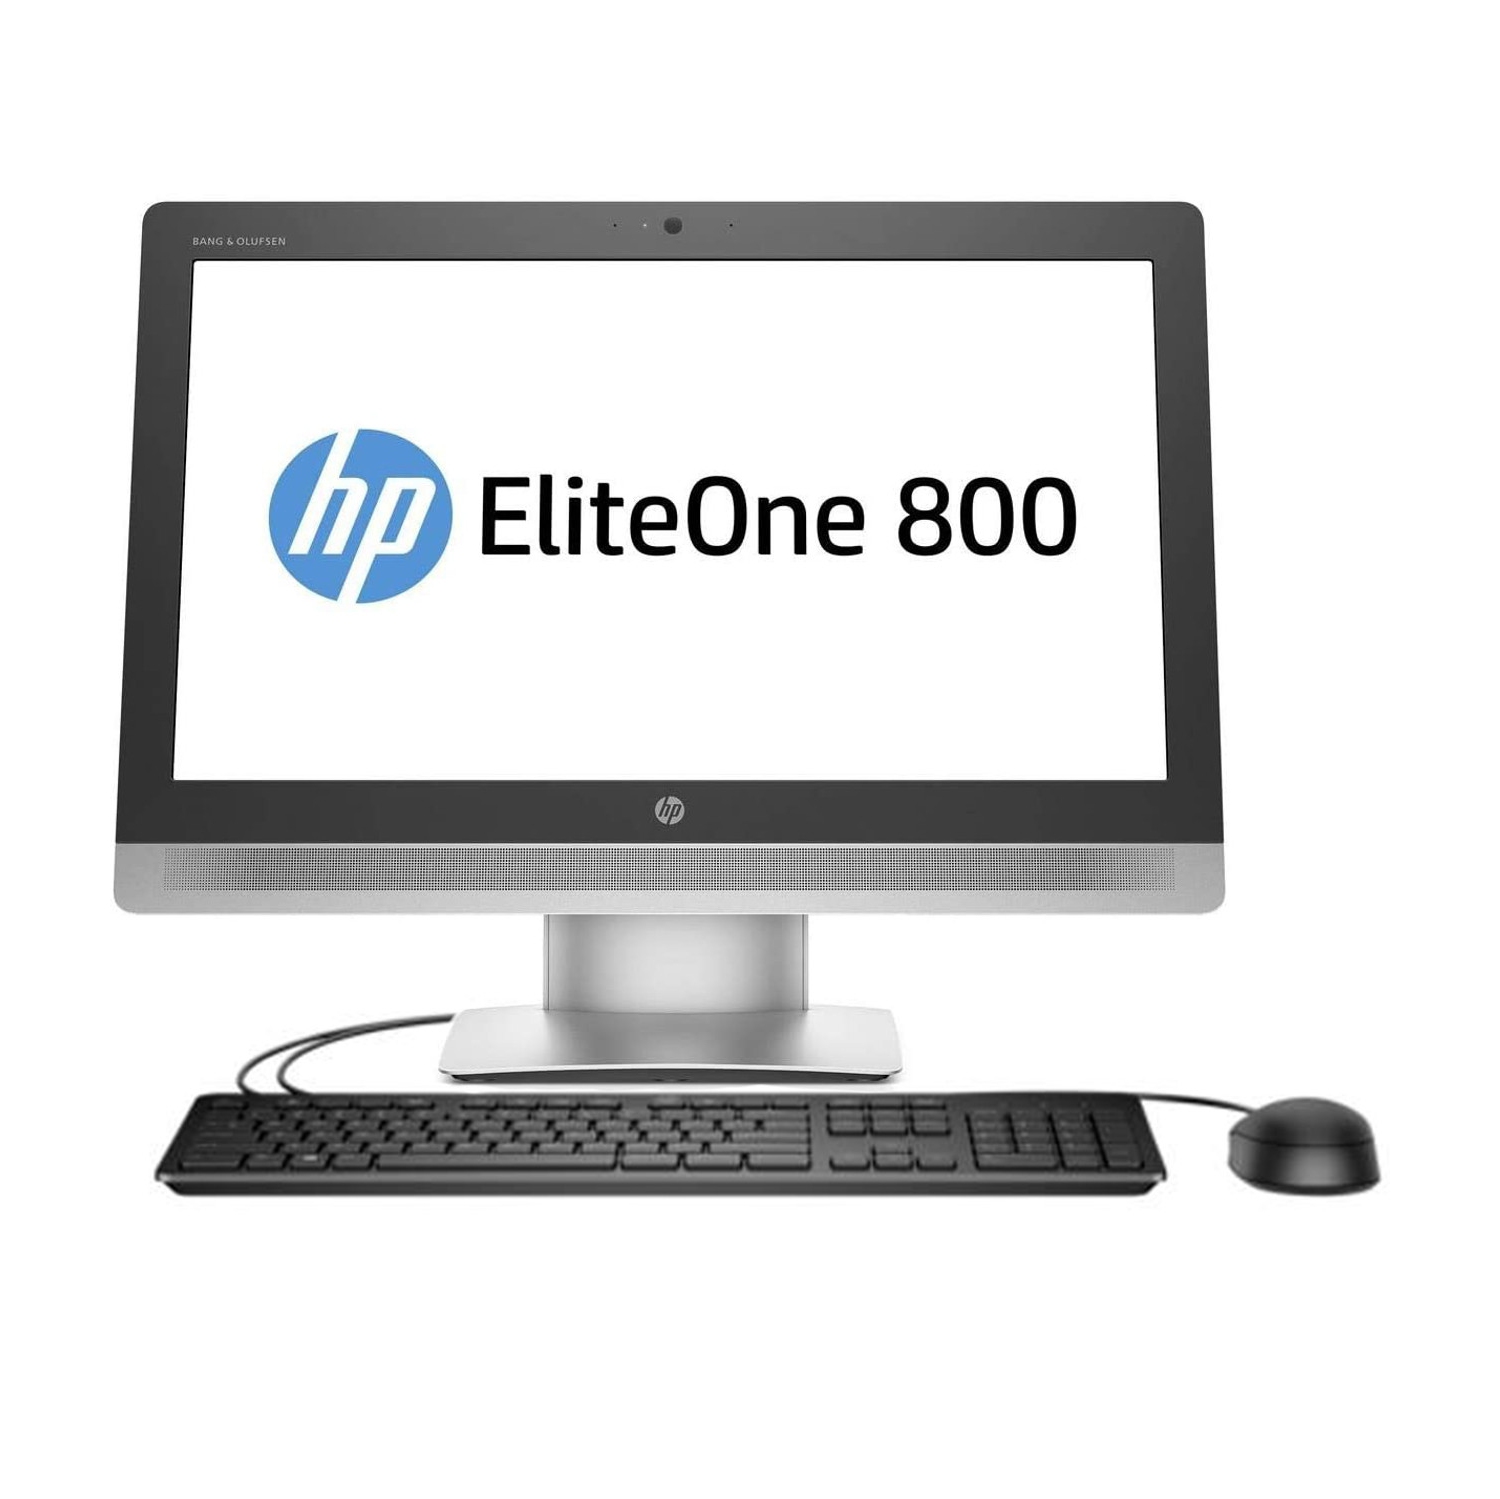 Refurbished (Good) - HP EliteOne 800 G2 23-in AIO (All-in-One) Intel i5-6500 3.2GHz, 8GB RAM, 500GB SATA HDD, Built-in Speakers, Webcam, WiFi, (MK120 Keyboard & Mouse) Win. 10 Home